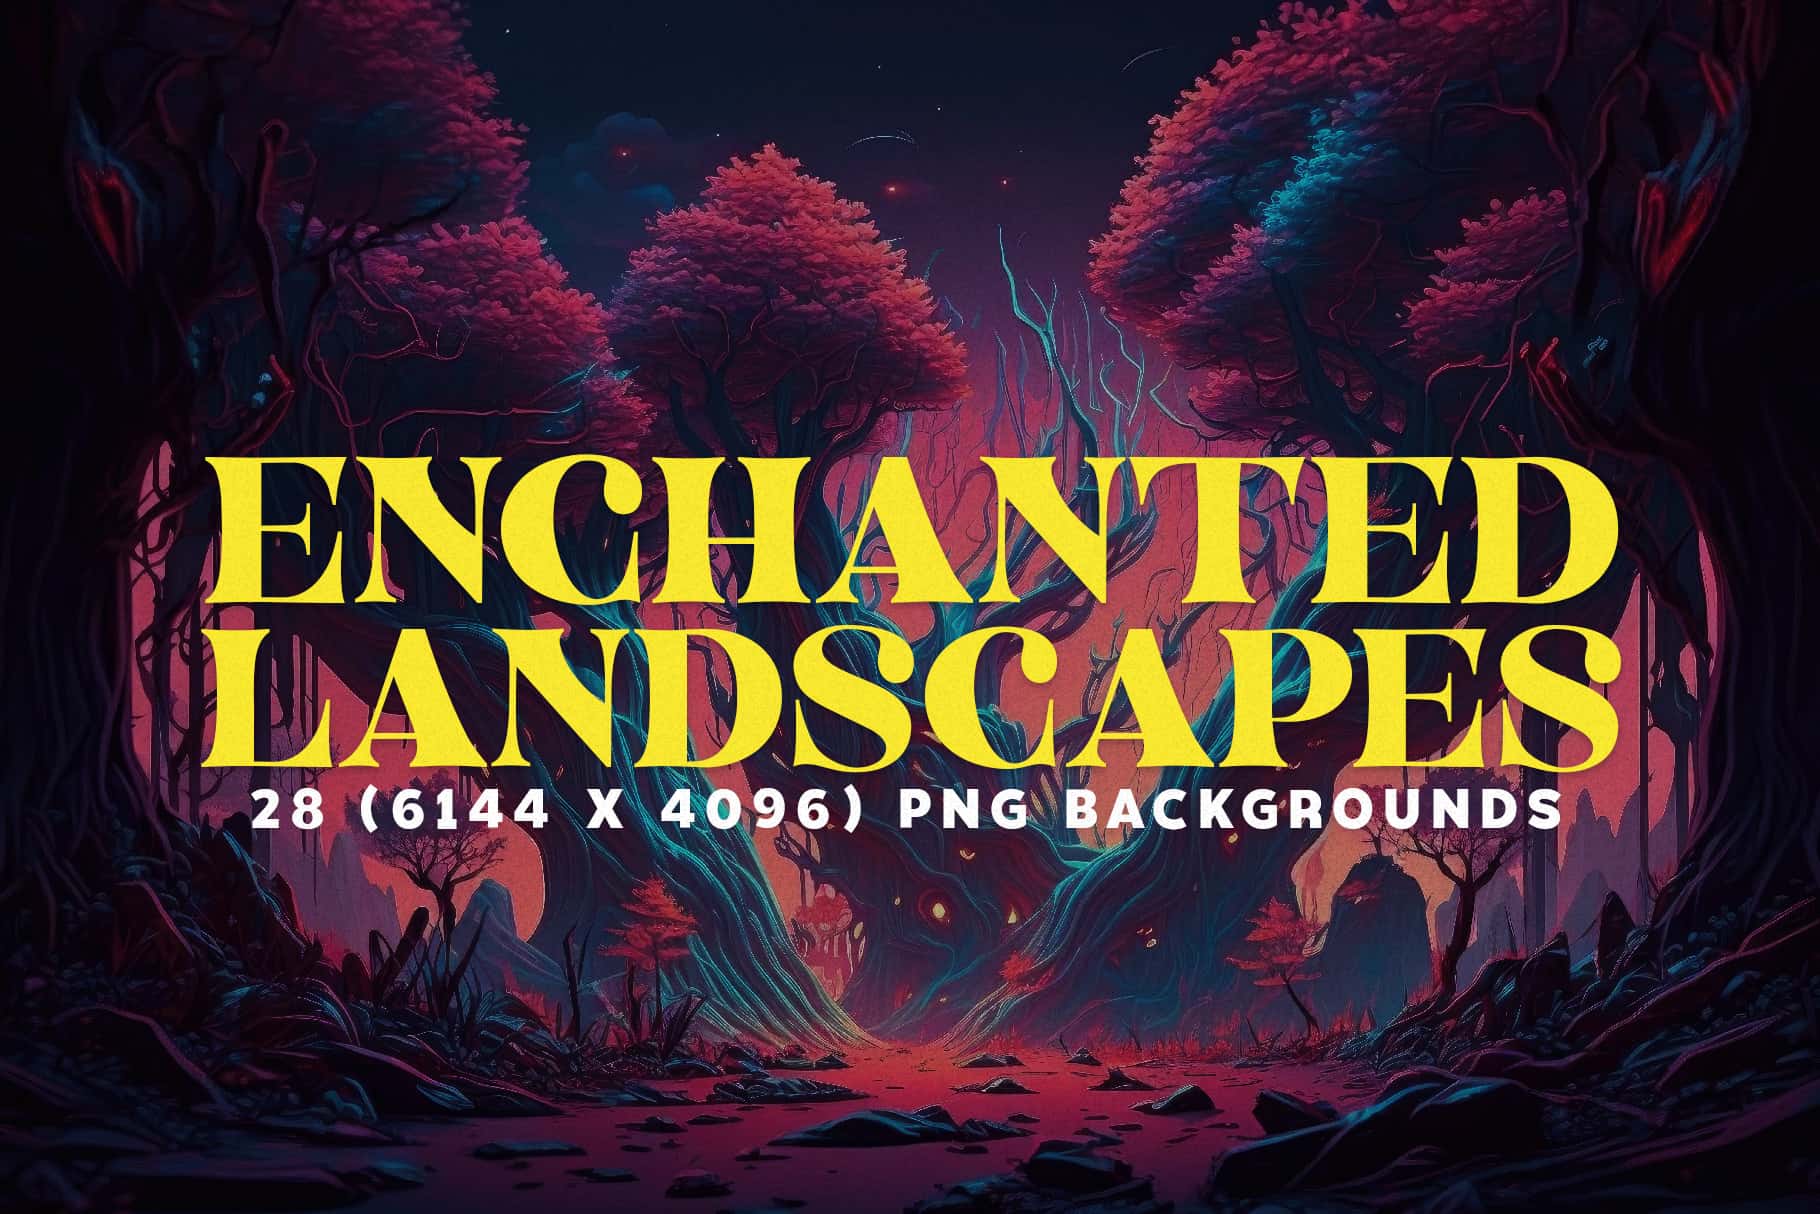 Enchanted Landscape Cover